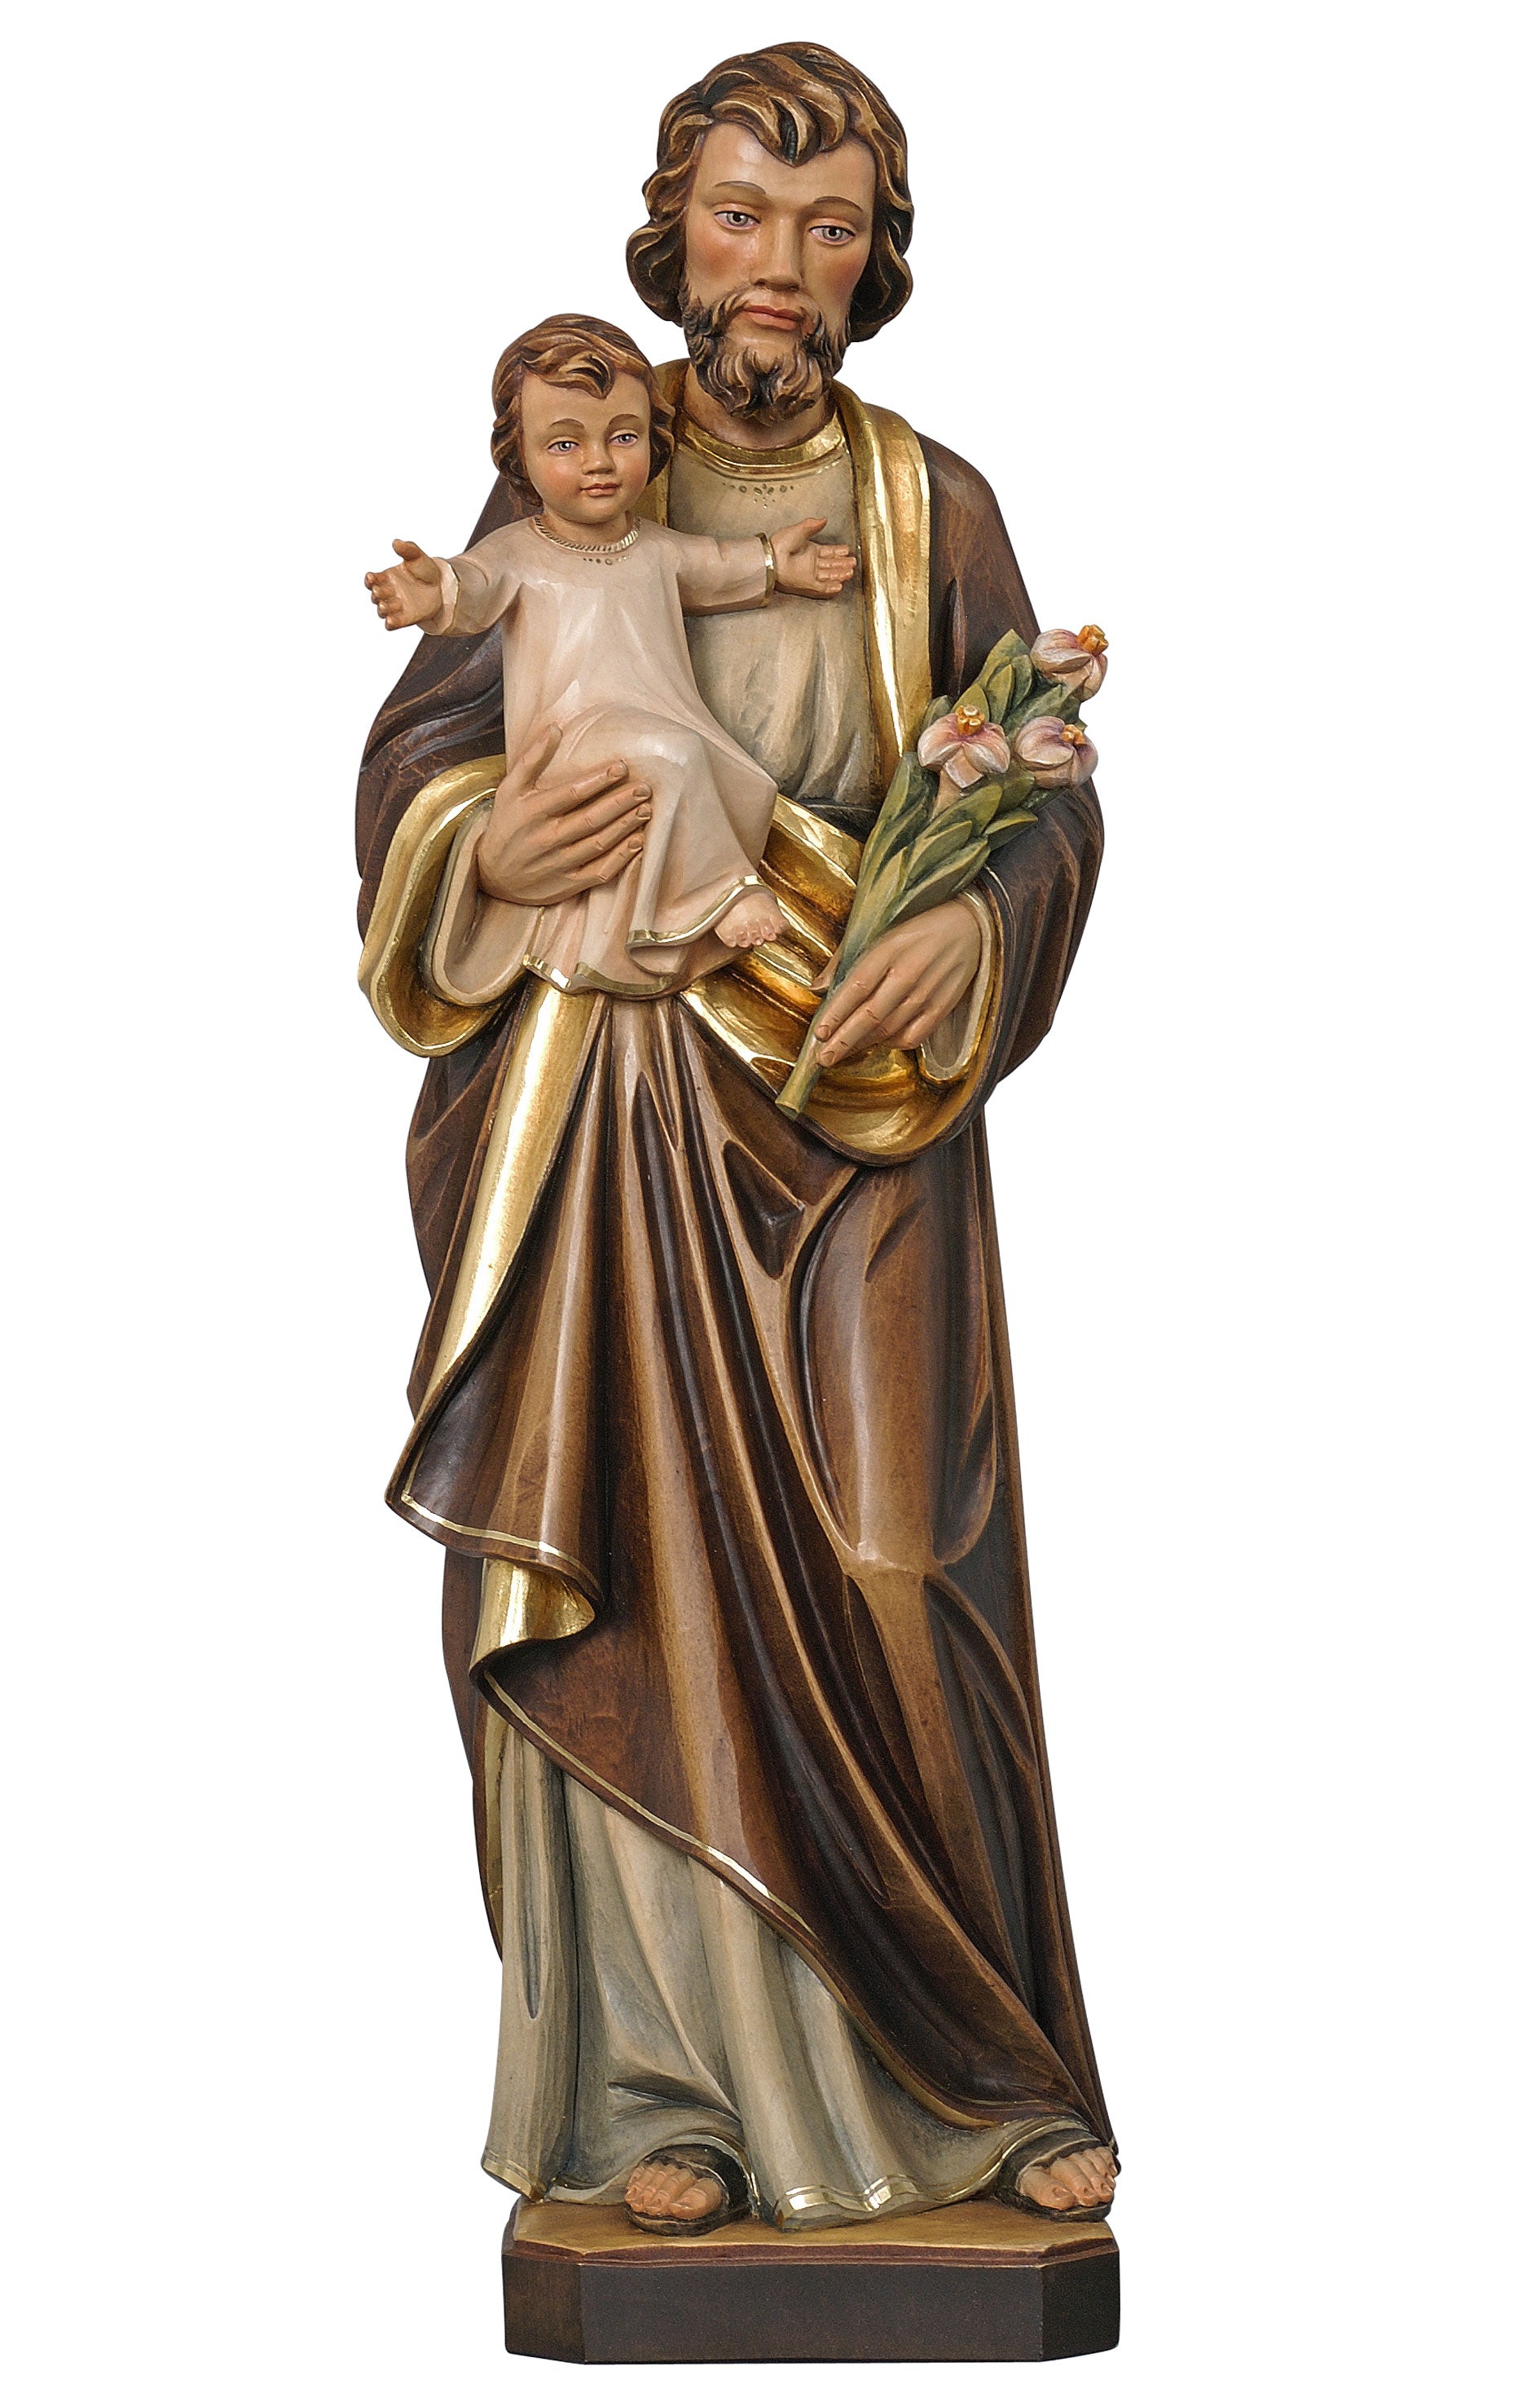 st-joseph-and-child-jesus-wood-statue-256000.jpg